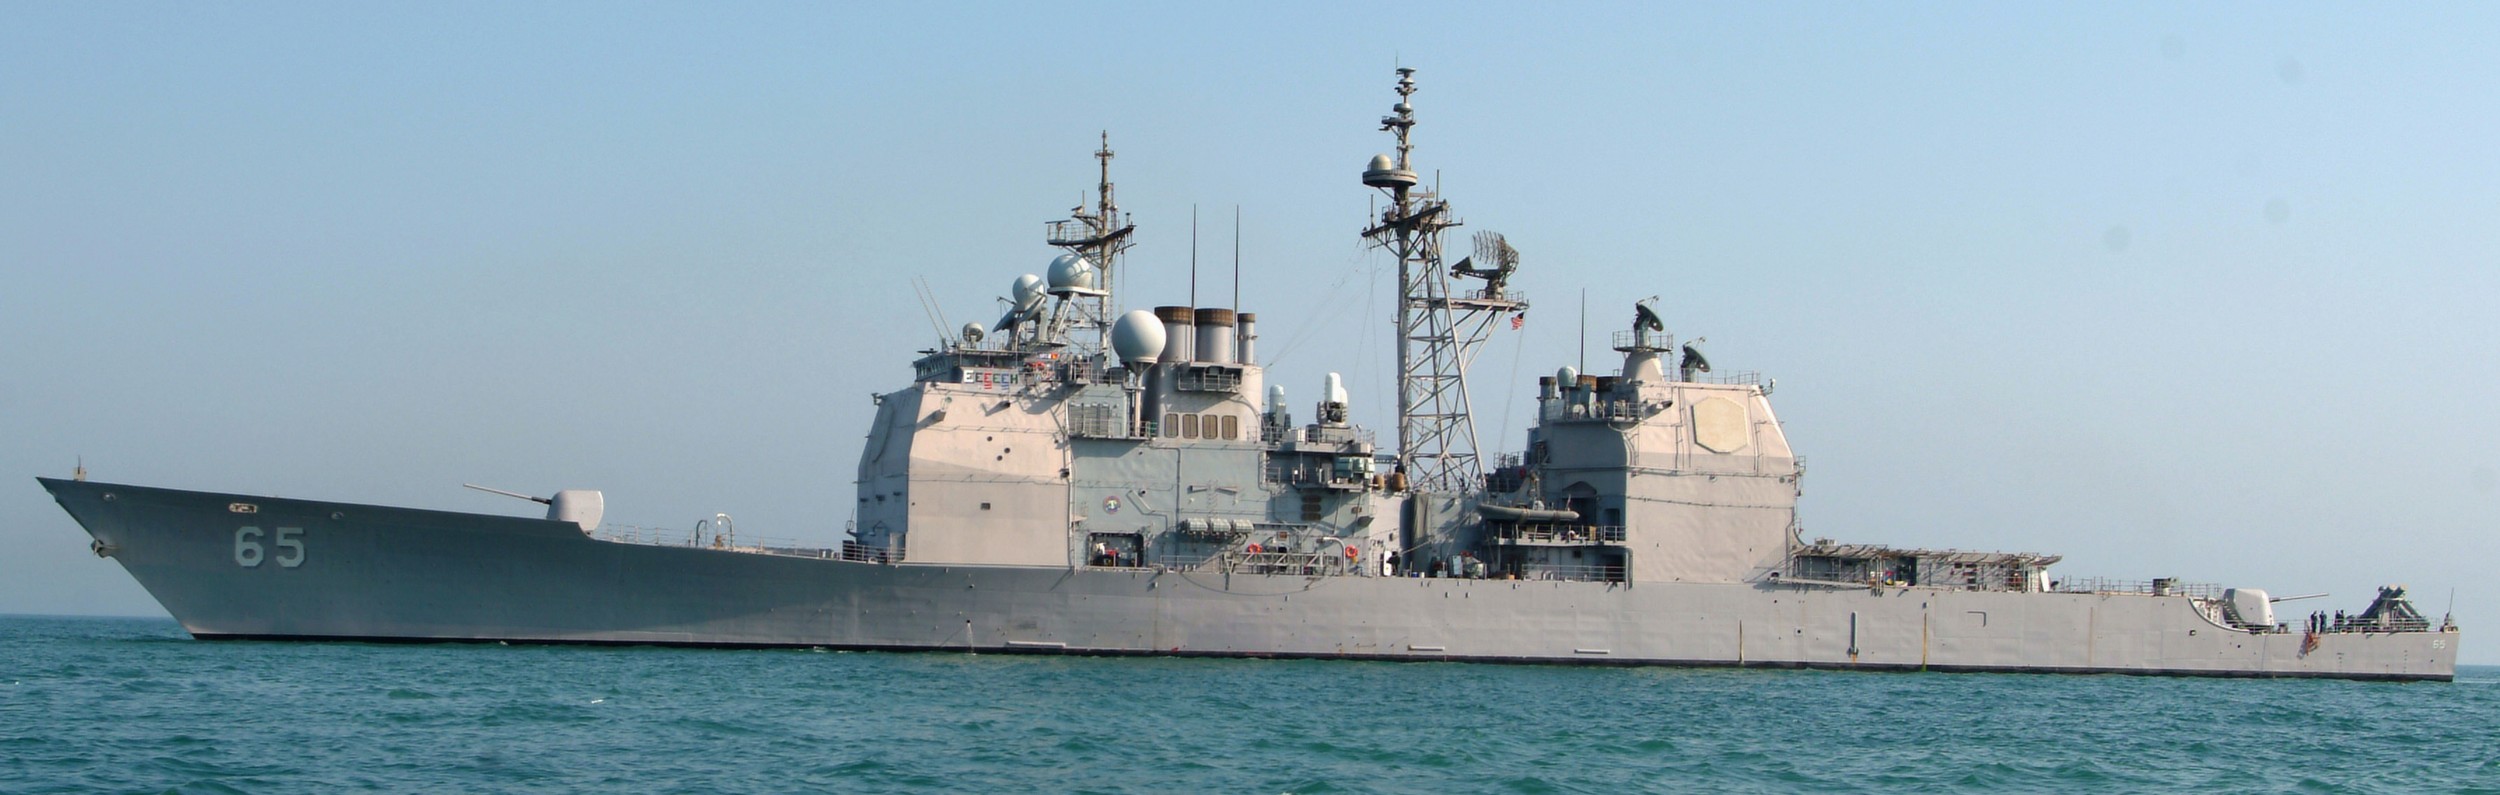 cg-65 uss chosin ticonderoga class guided missile cruiser aegis us navy persian gulf 08